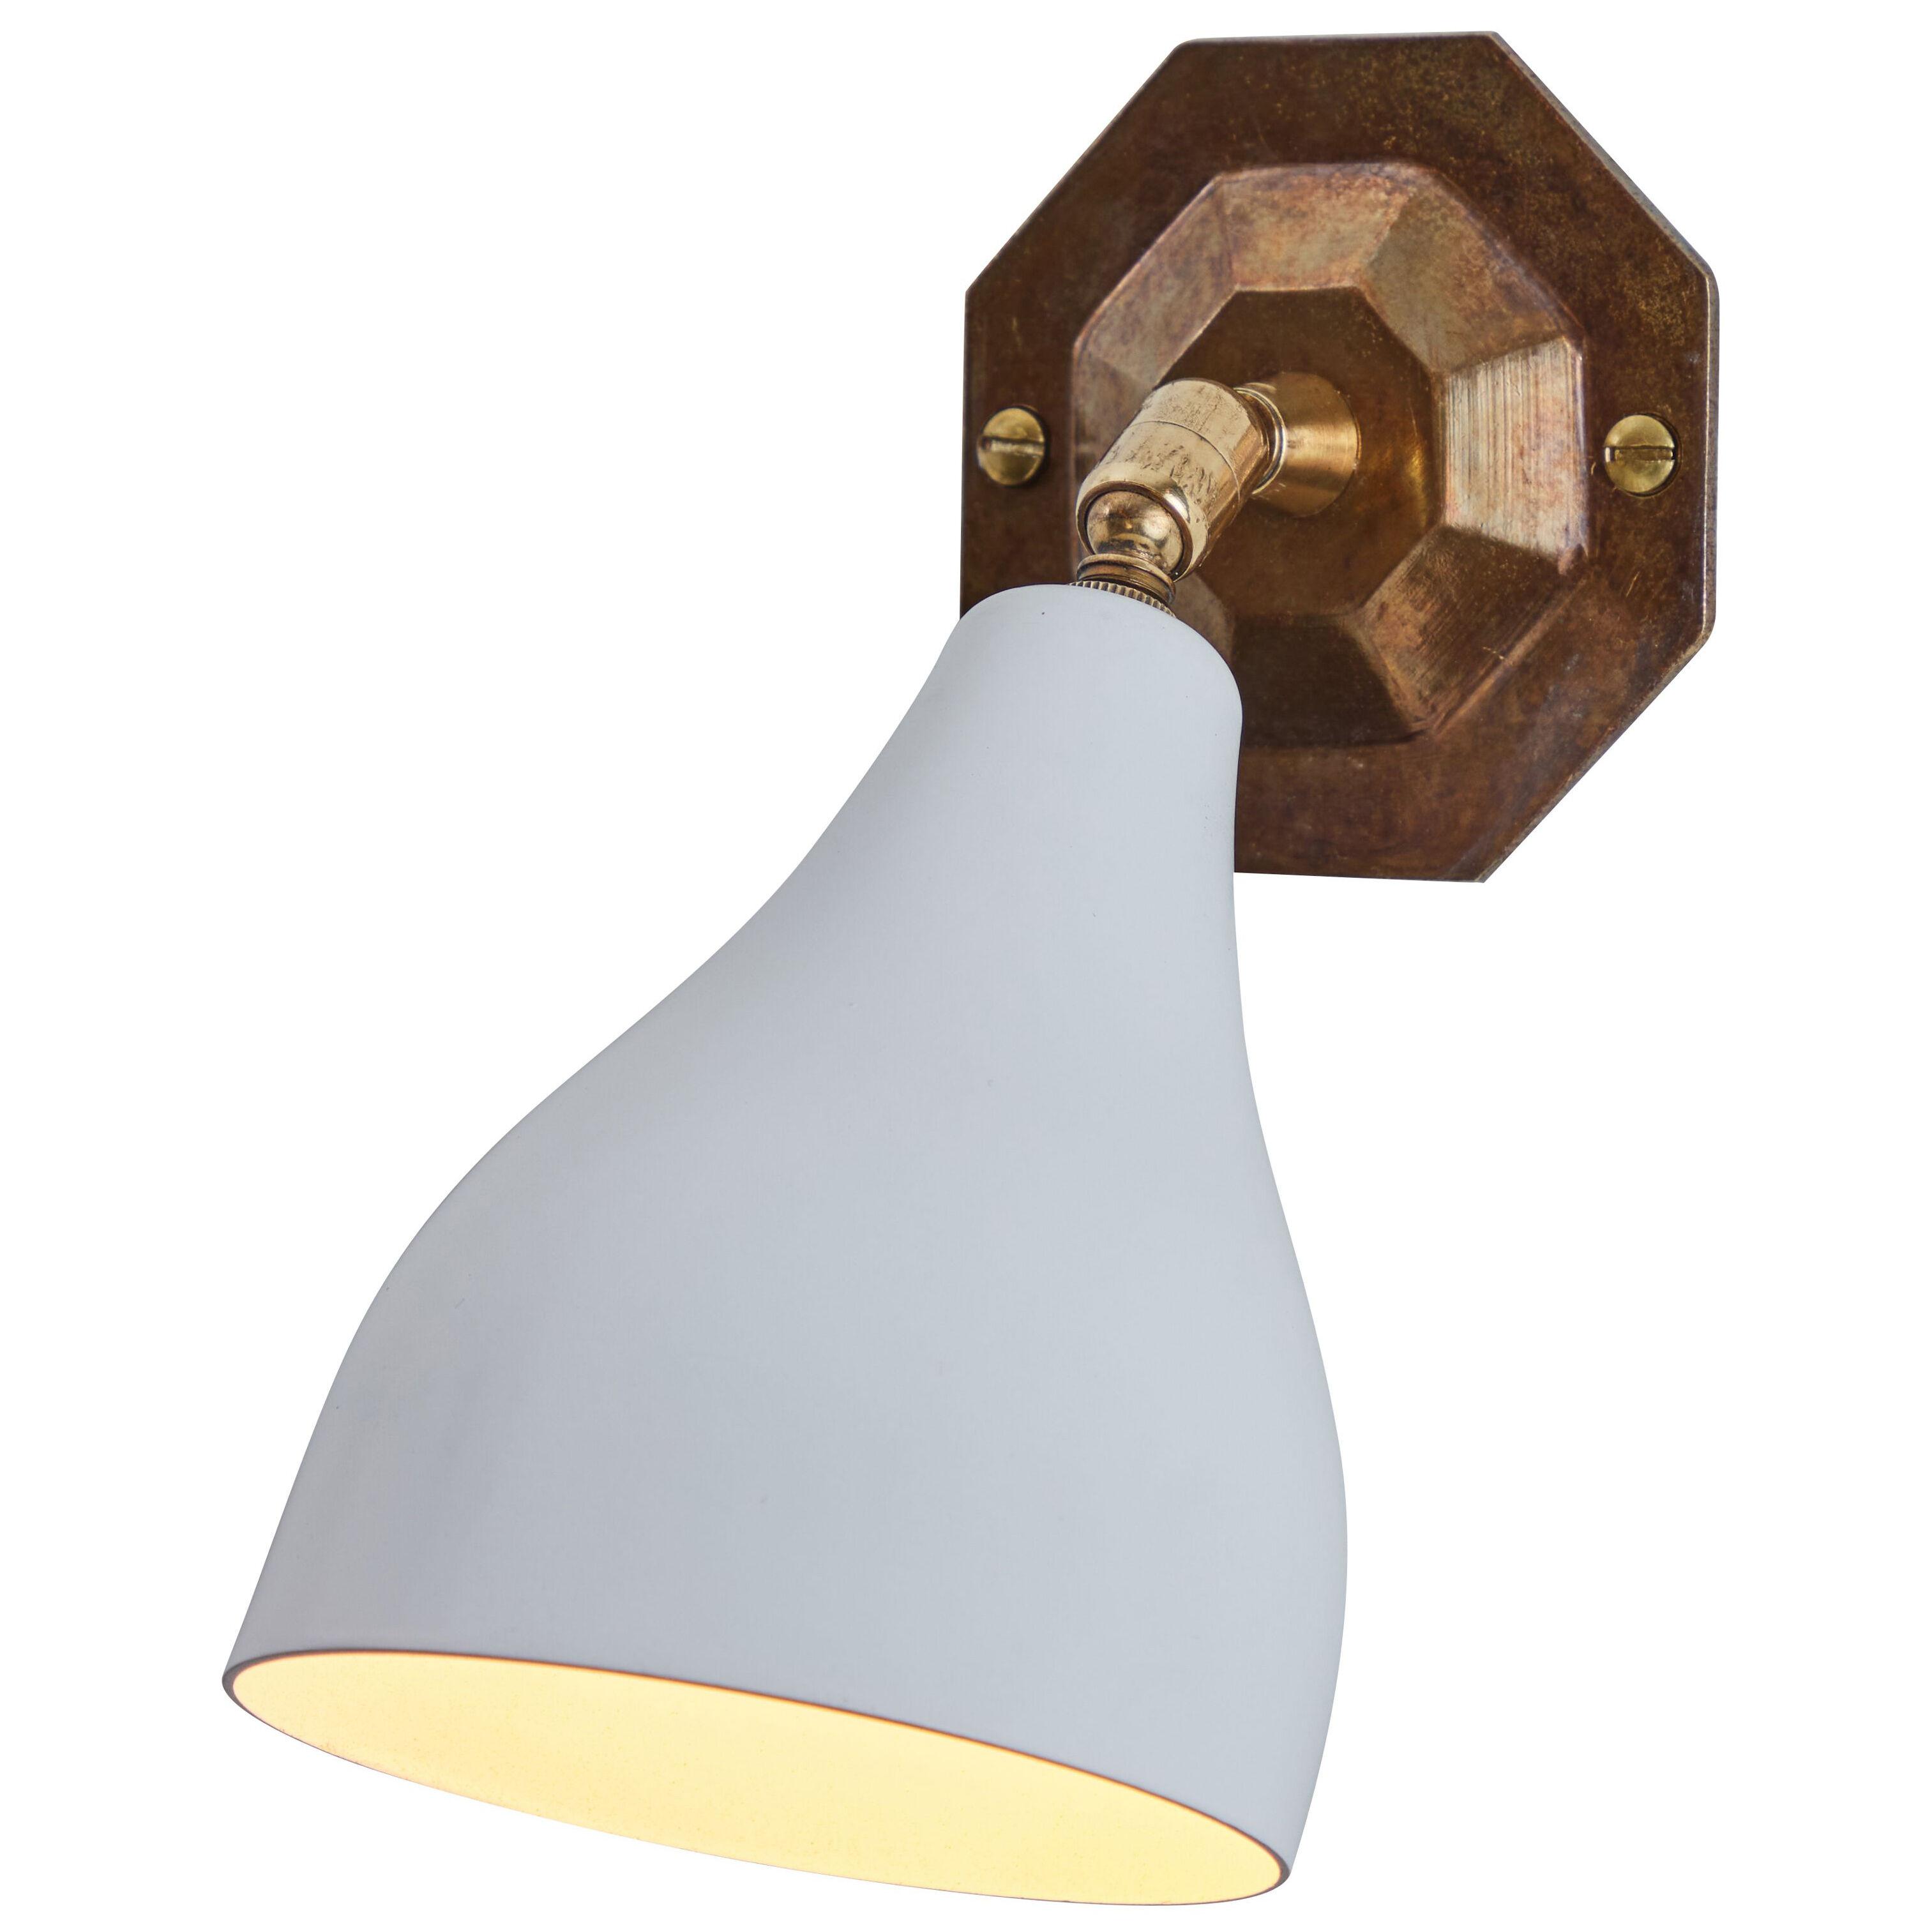 Gino Sarfatti Model #26b Wall Lamp for Arteluce